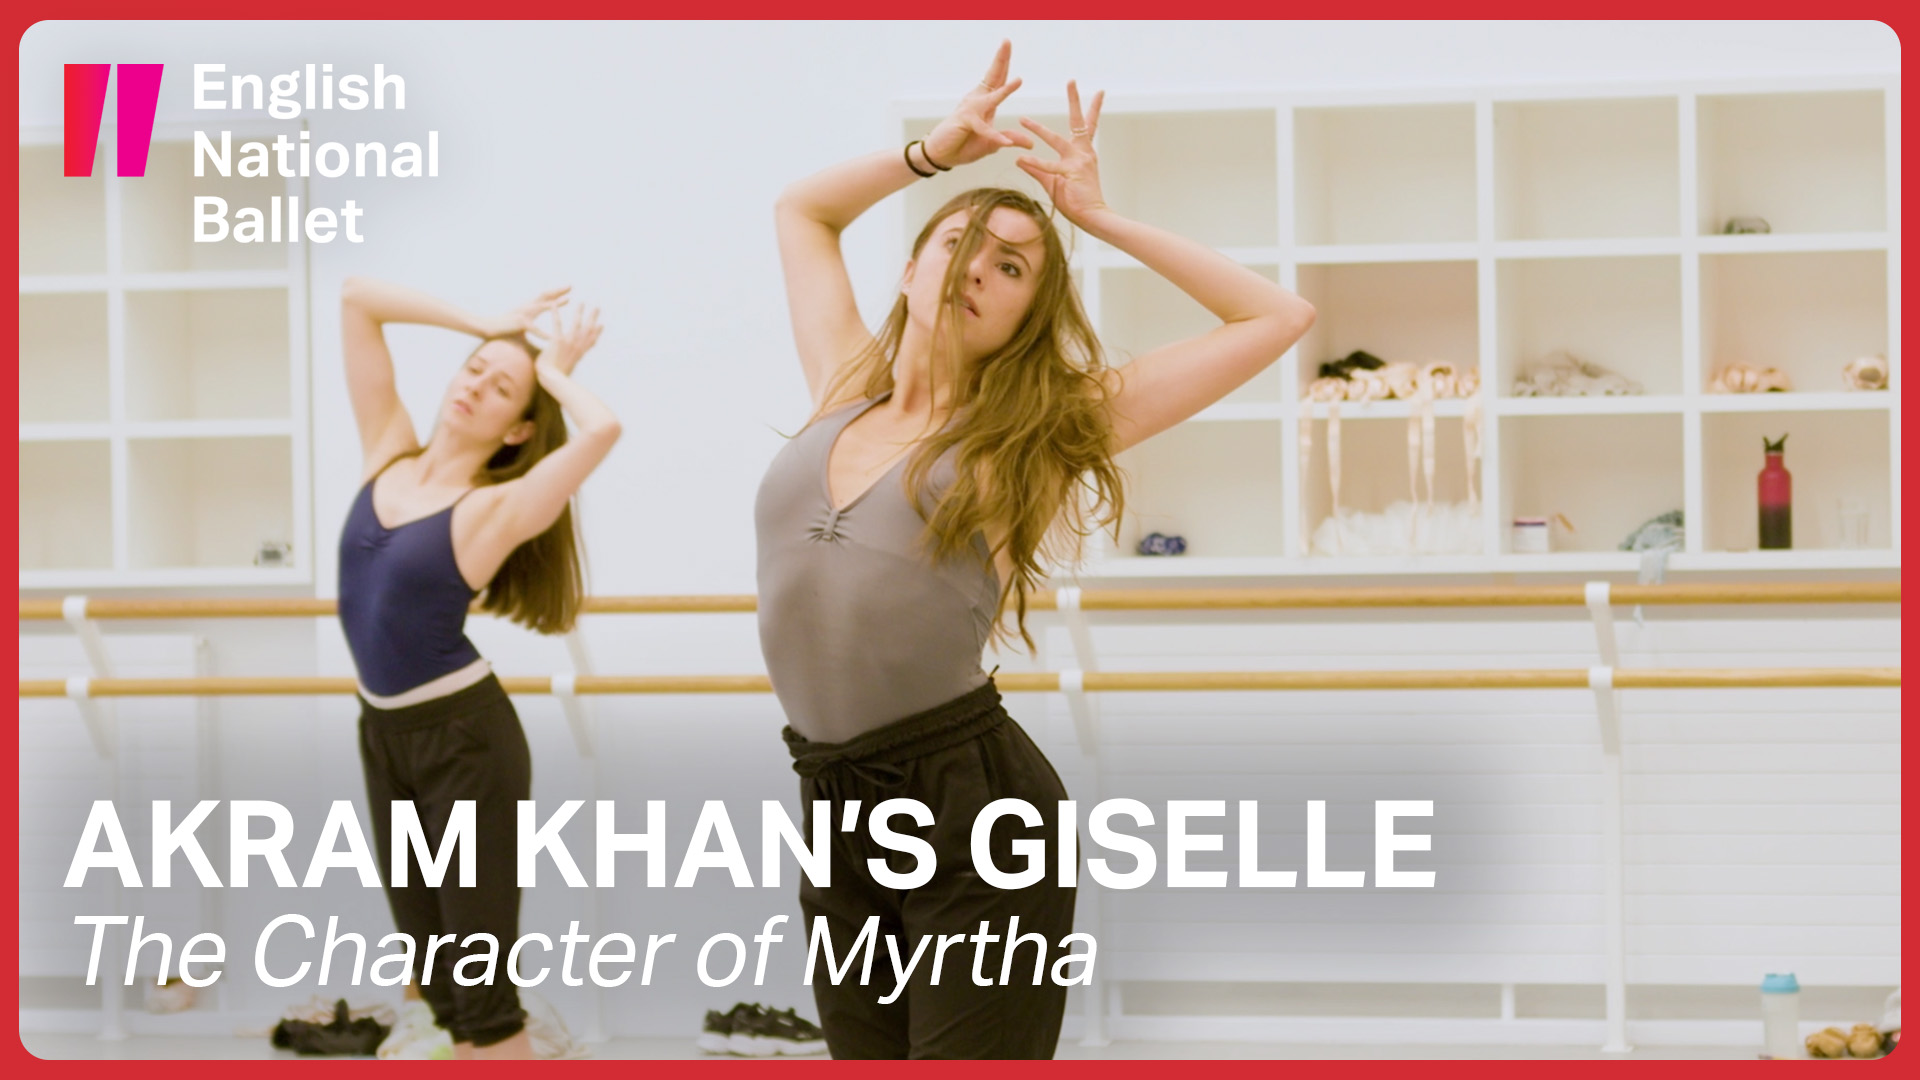 Akram Khan's Giselle: The Character of Myrtha - Insight | English National Ballet